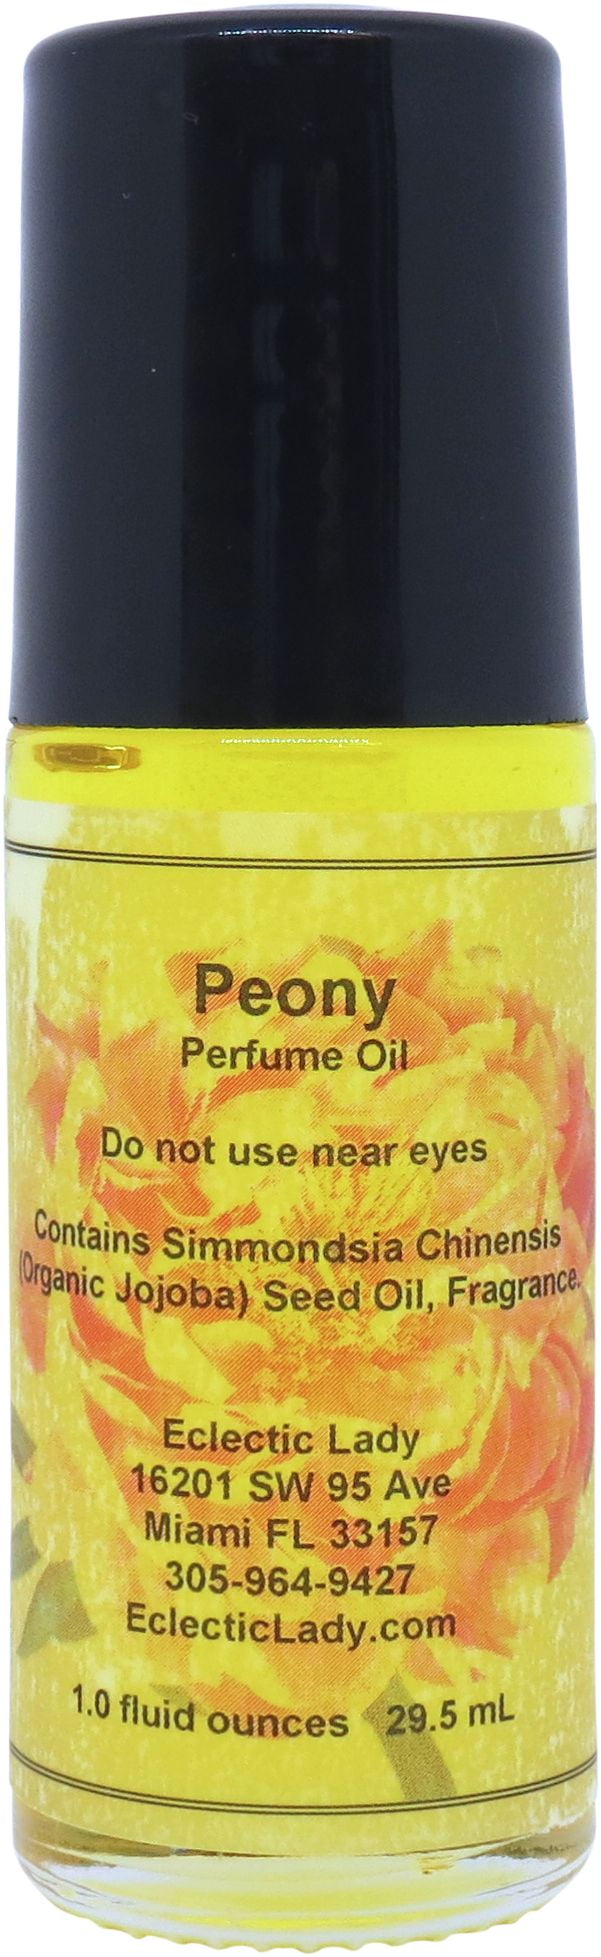 Peony - Perfume Oil